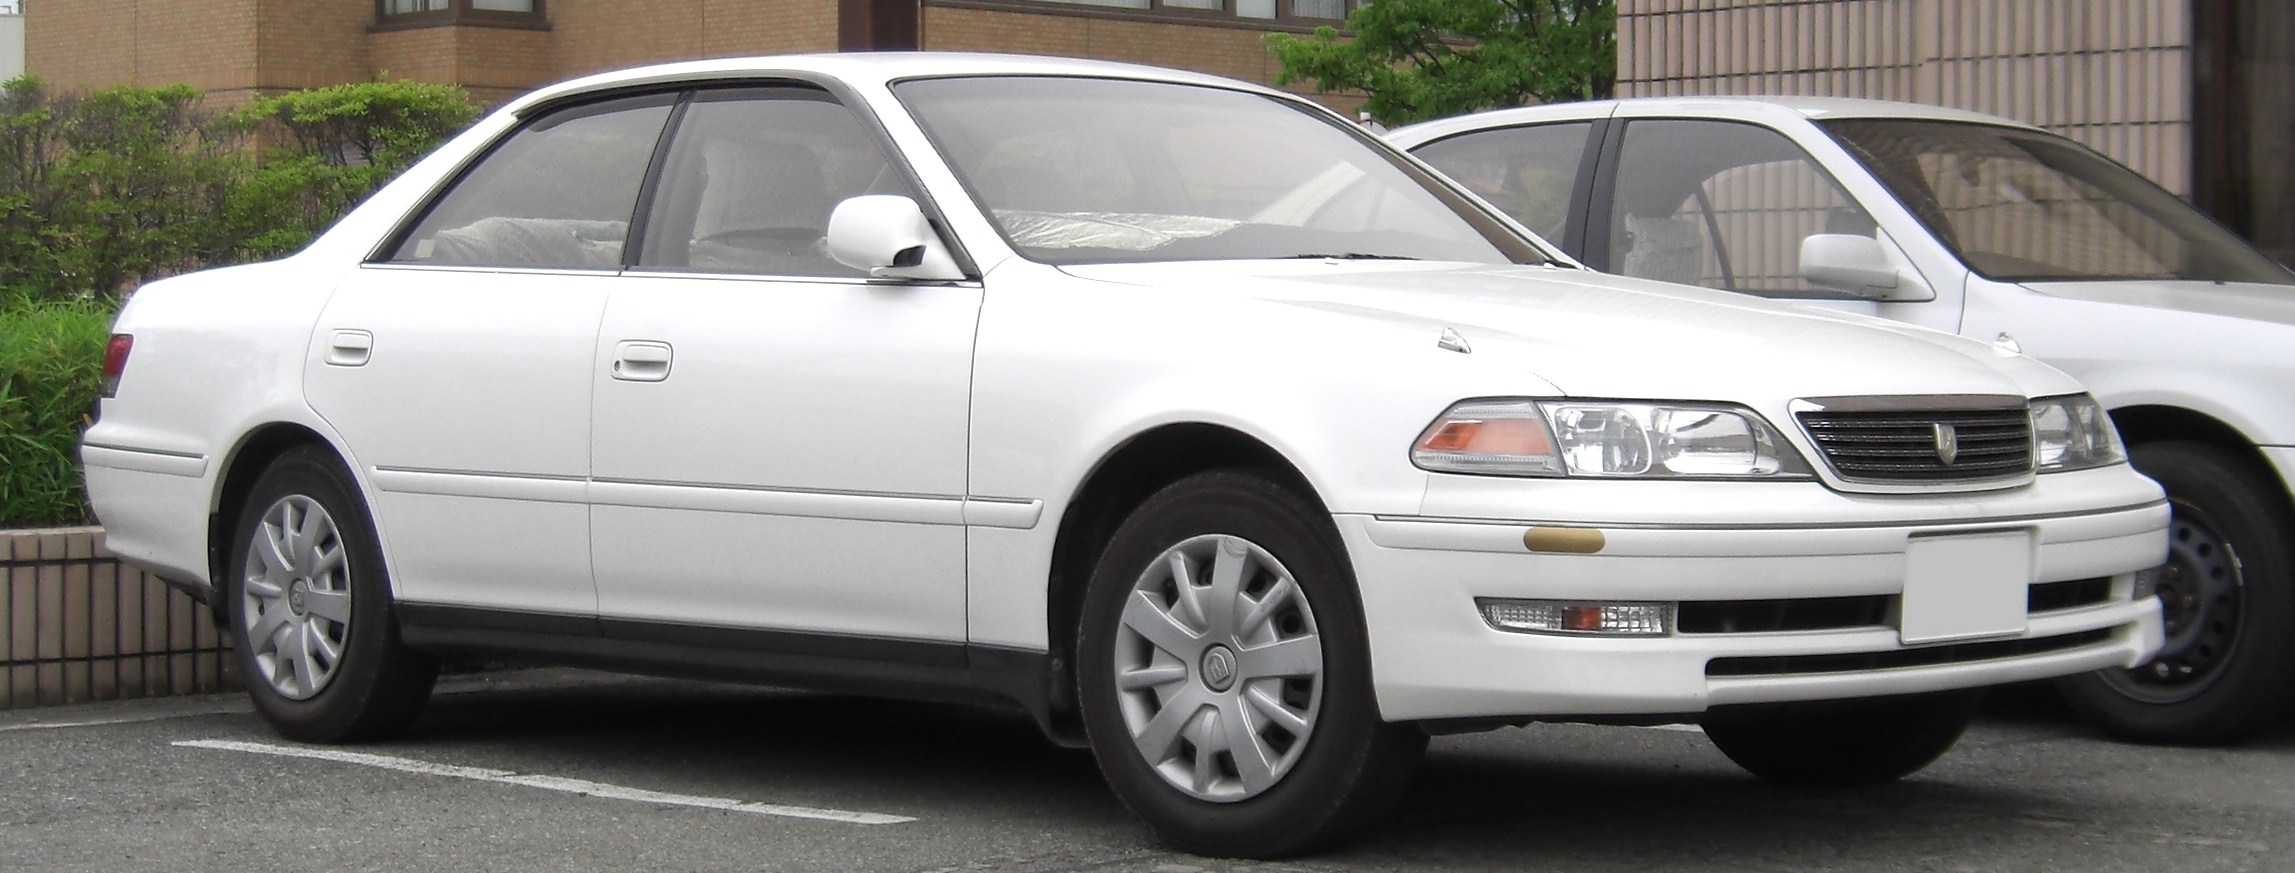 Toyota Mark II - Wikipedia